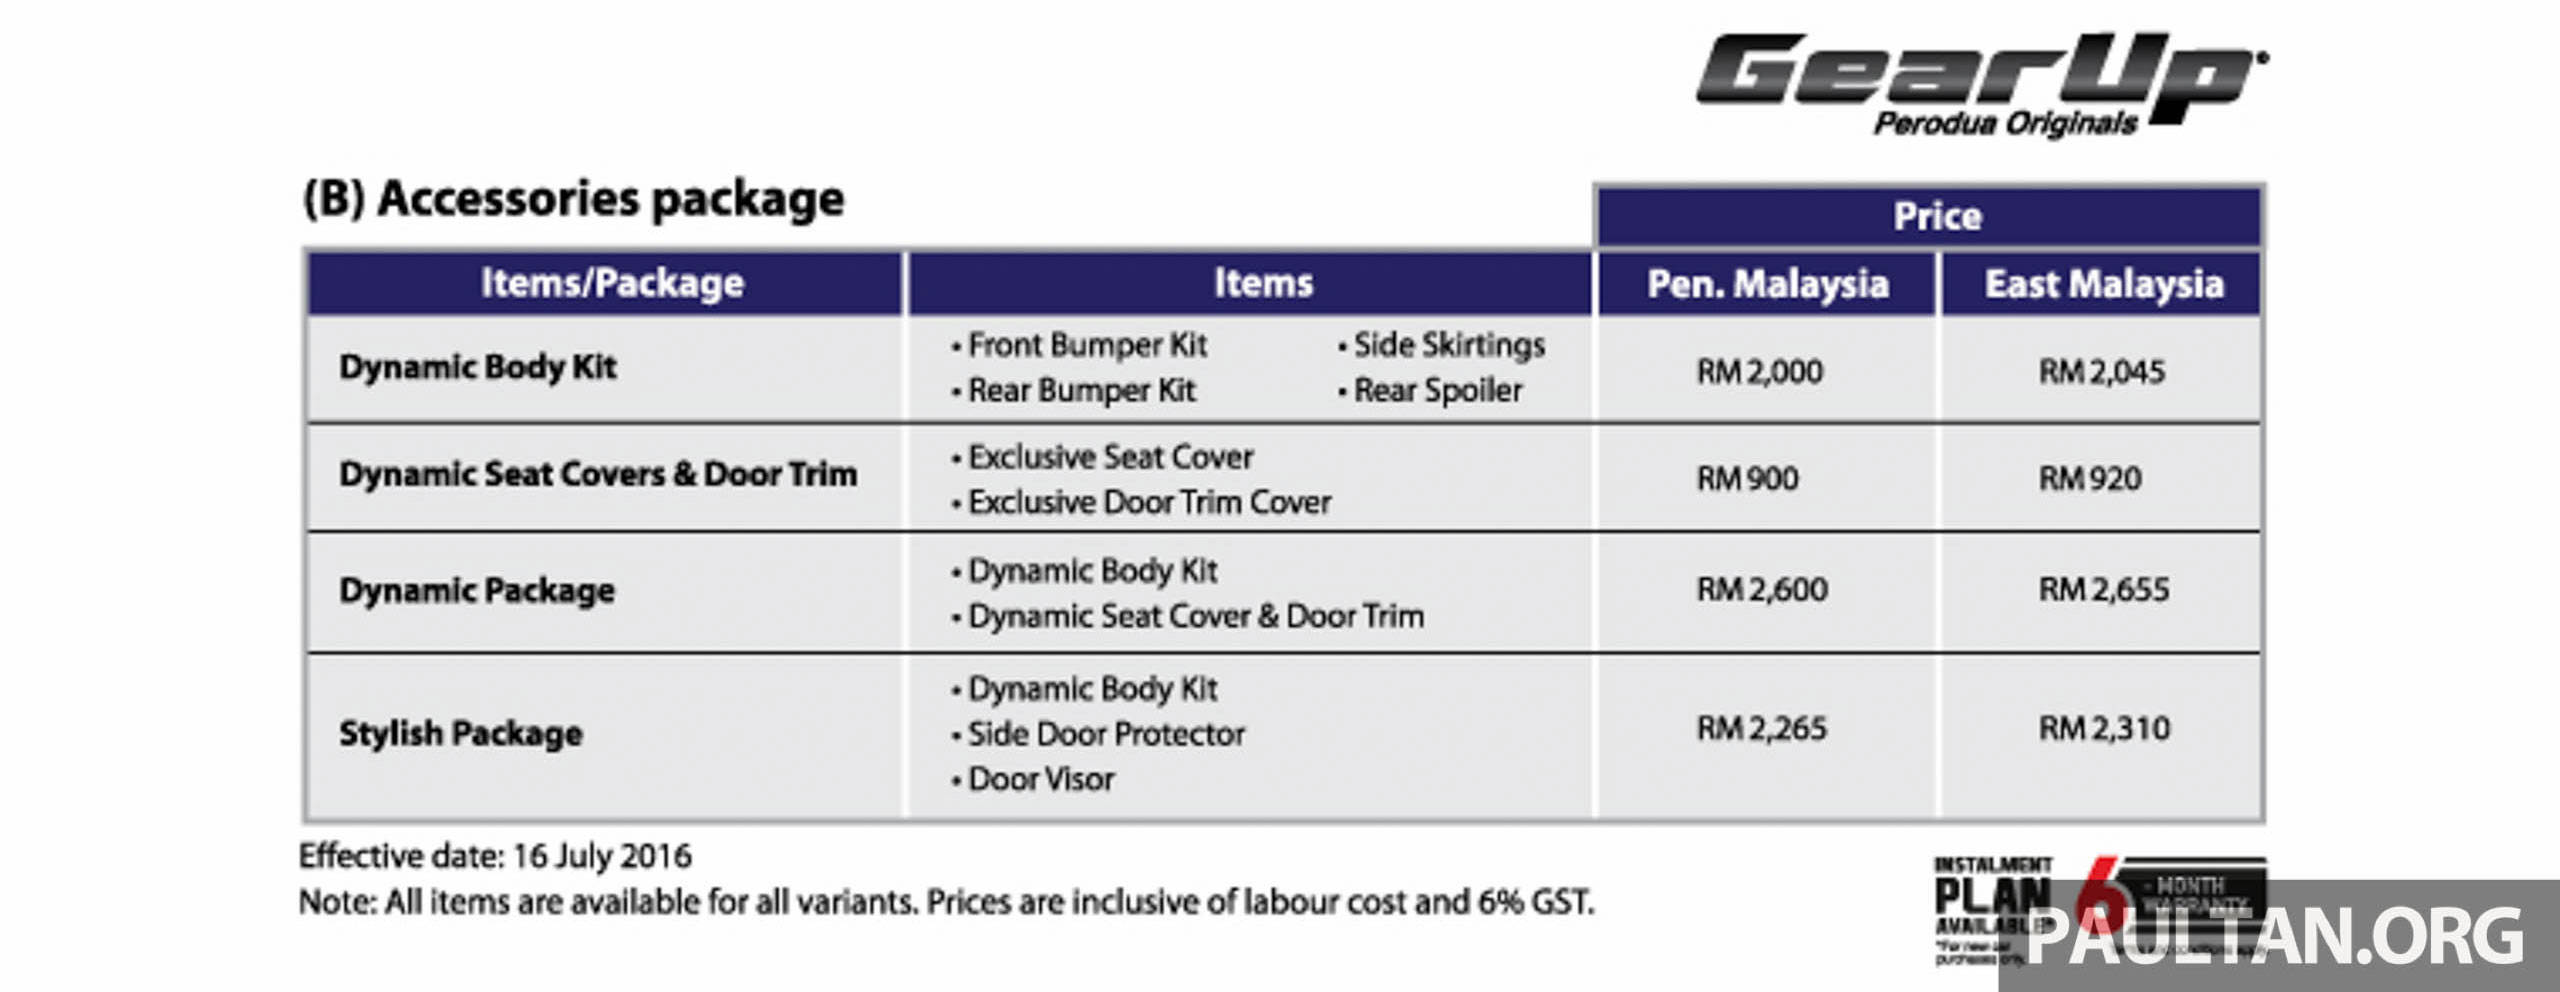 Perodua Bezza prices revealed – RM37k to RM51k Paul Tan 